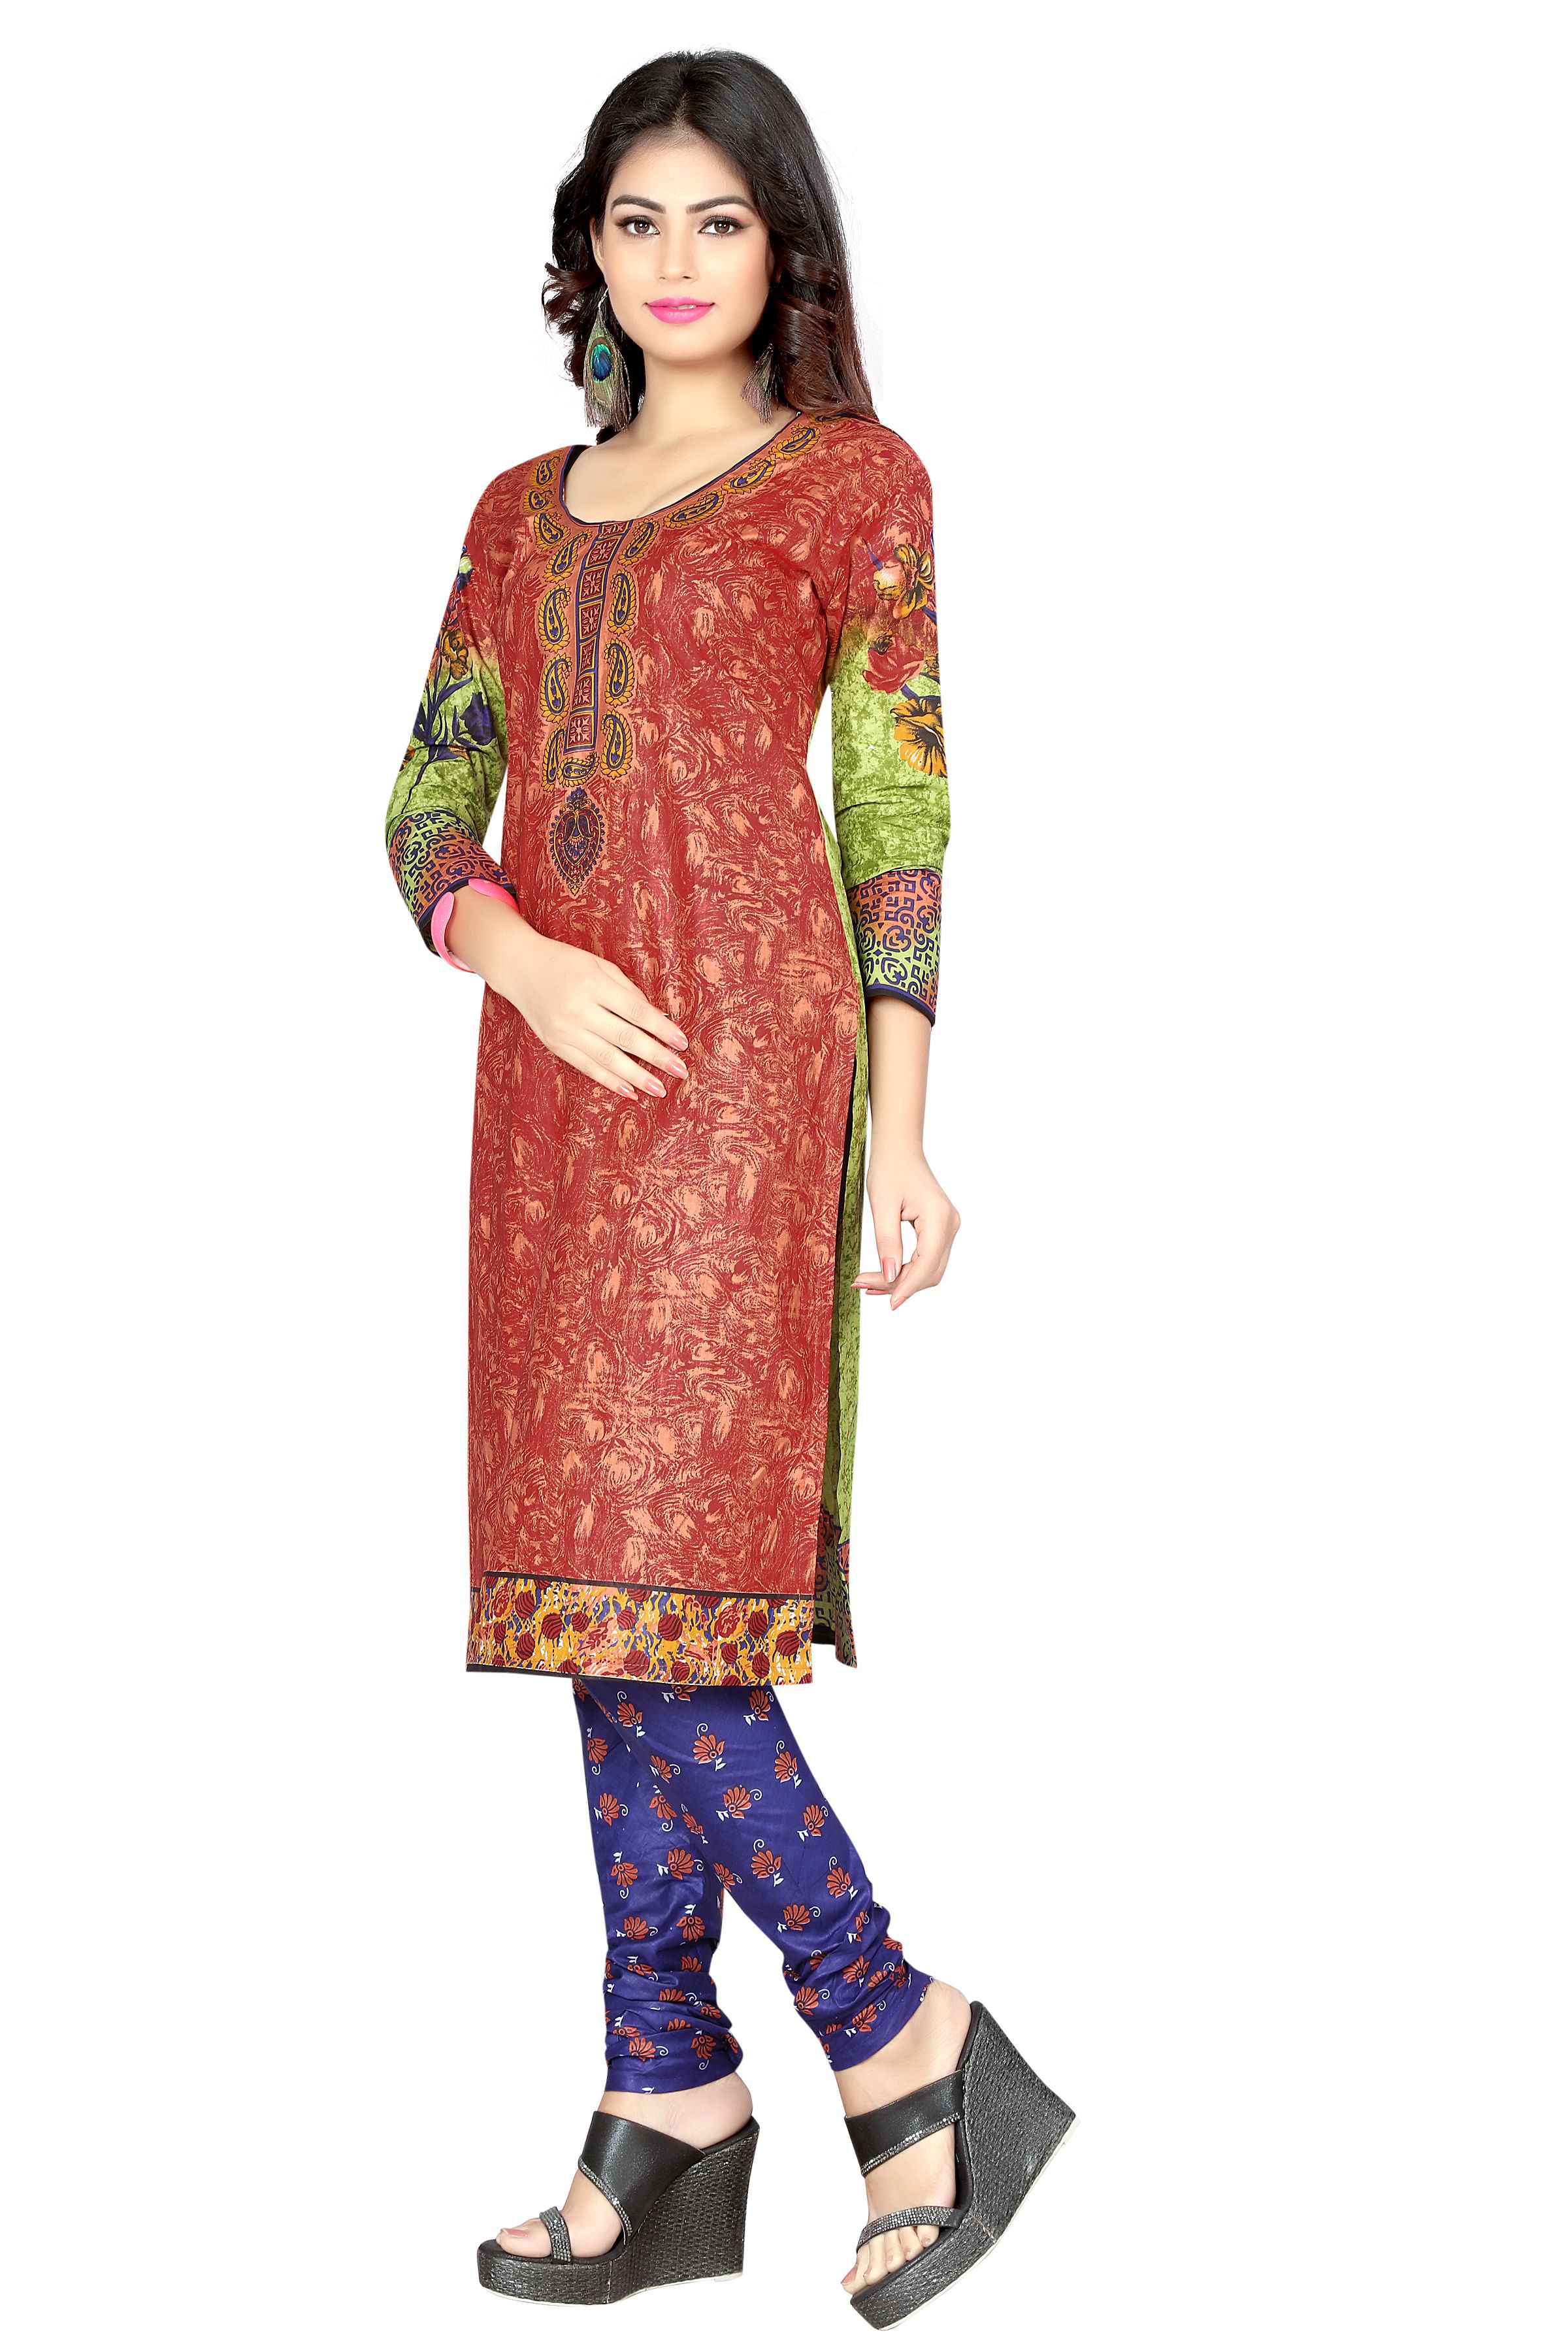 Sondarya Bandhani Multicoloured Cotton Dress Material - Buy Sondarya ...